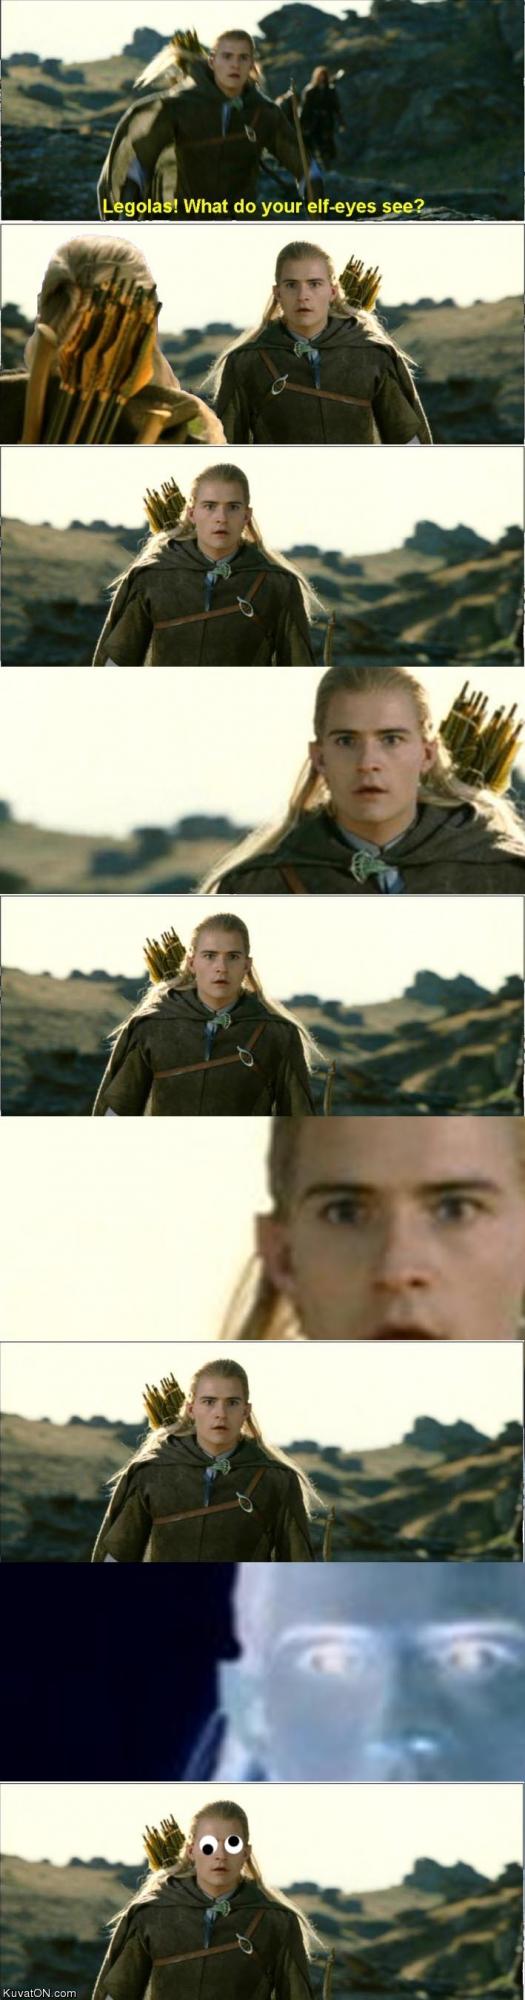 Legolas' Superb Eyes